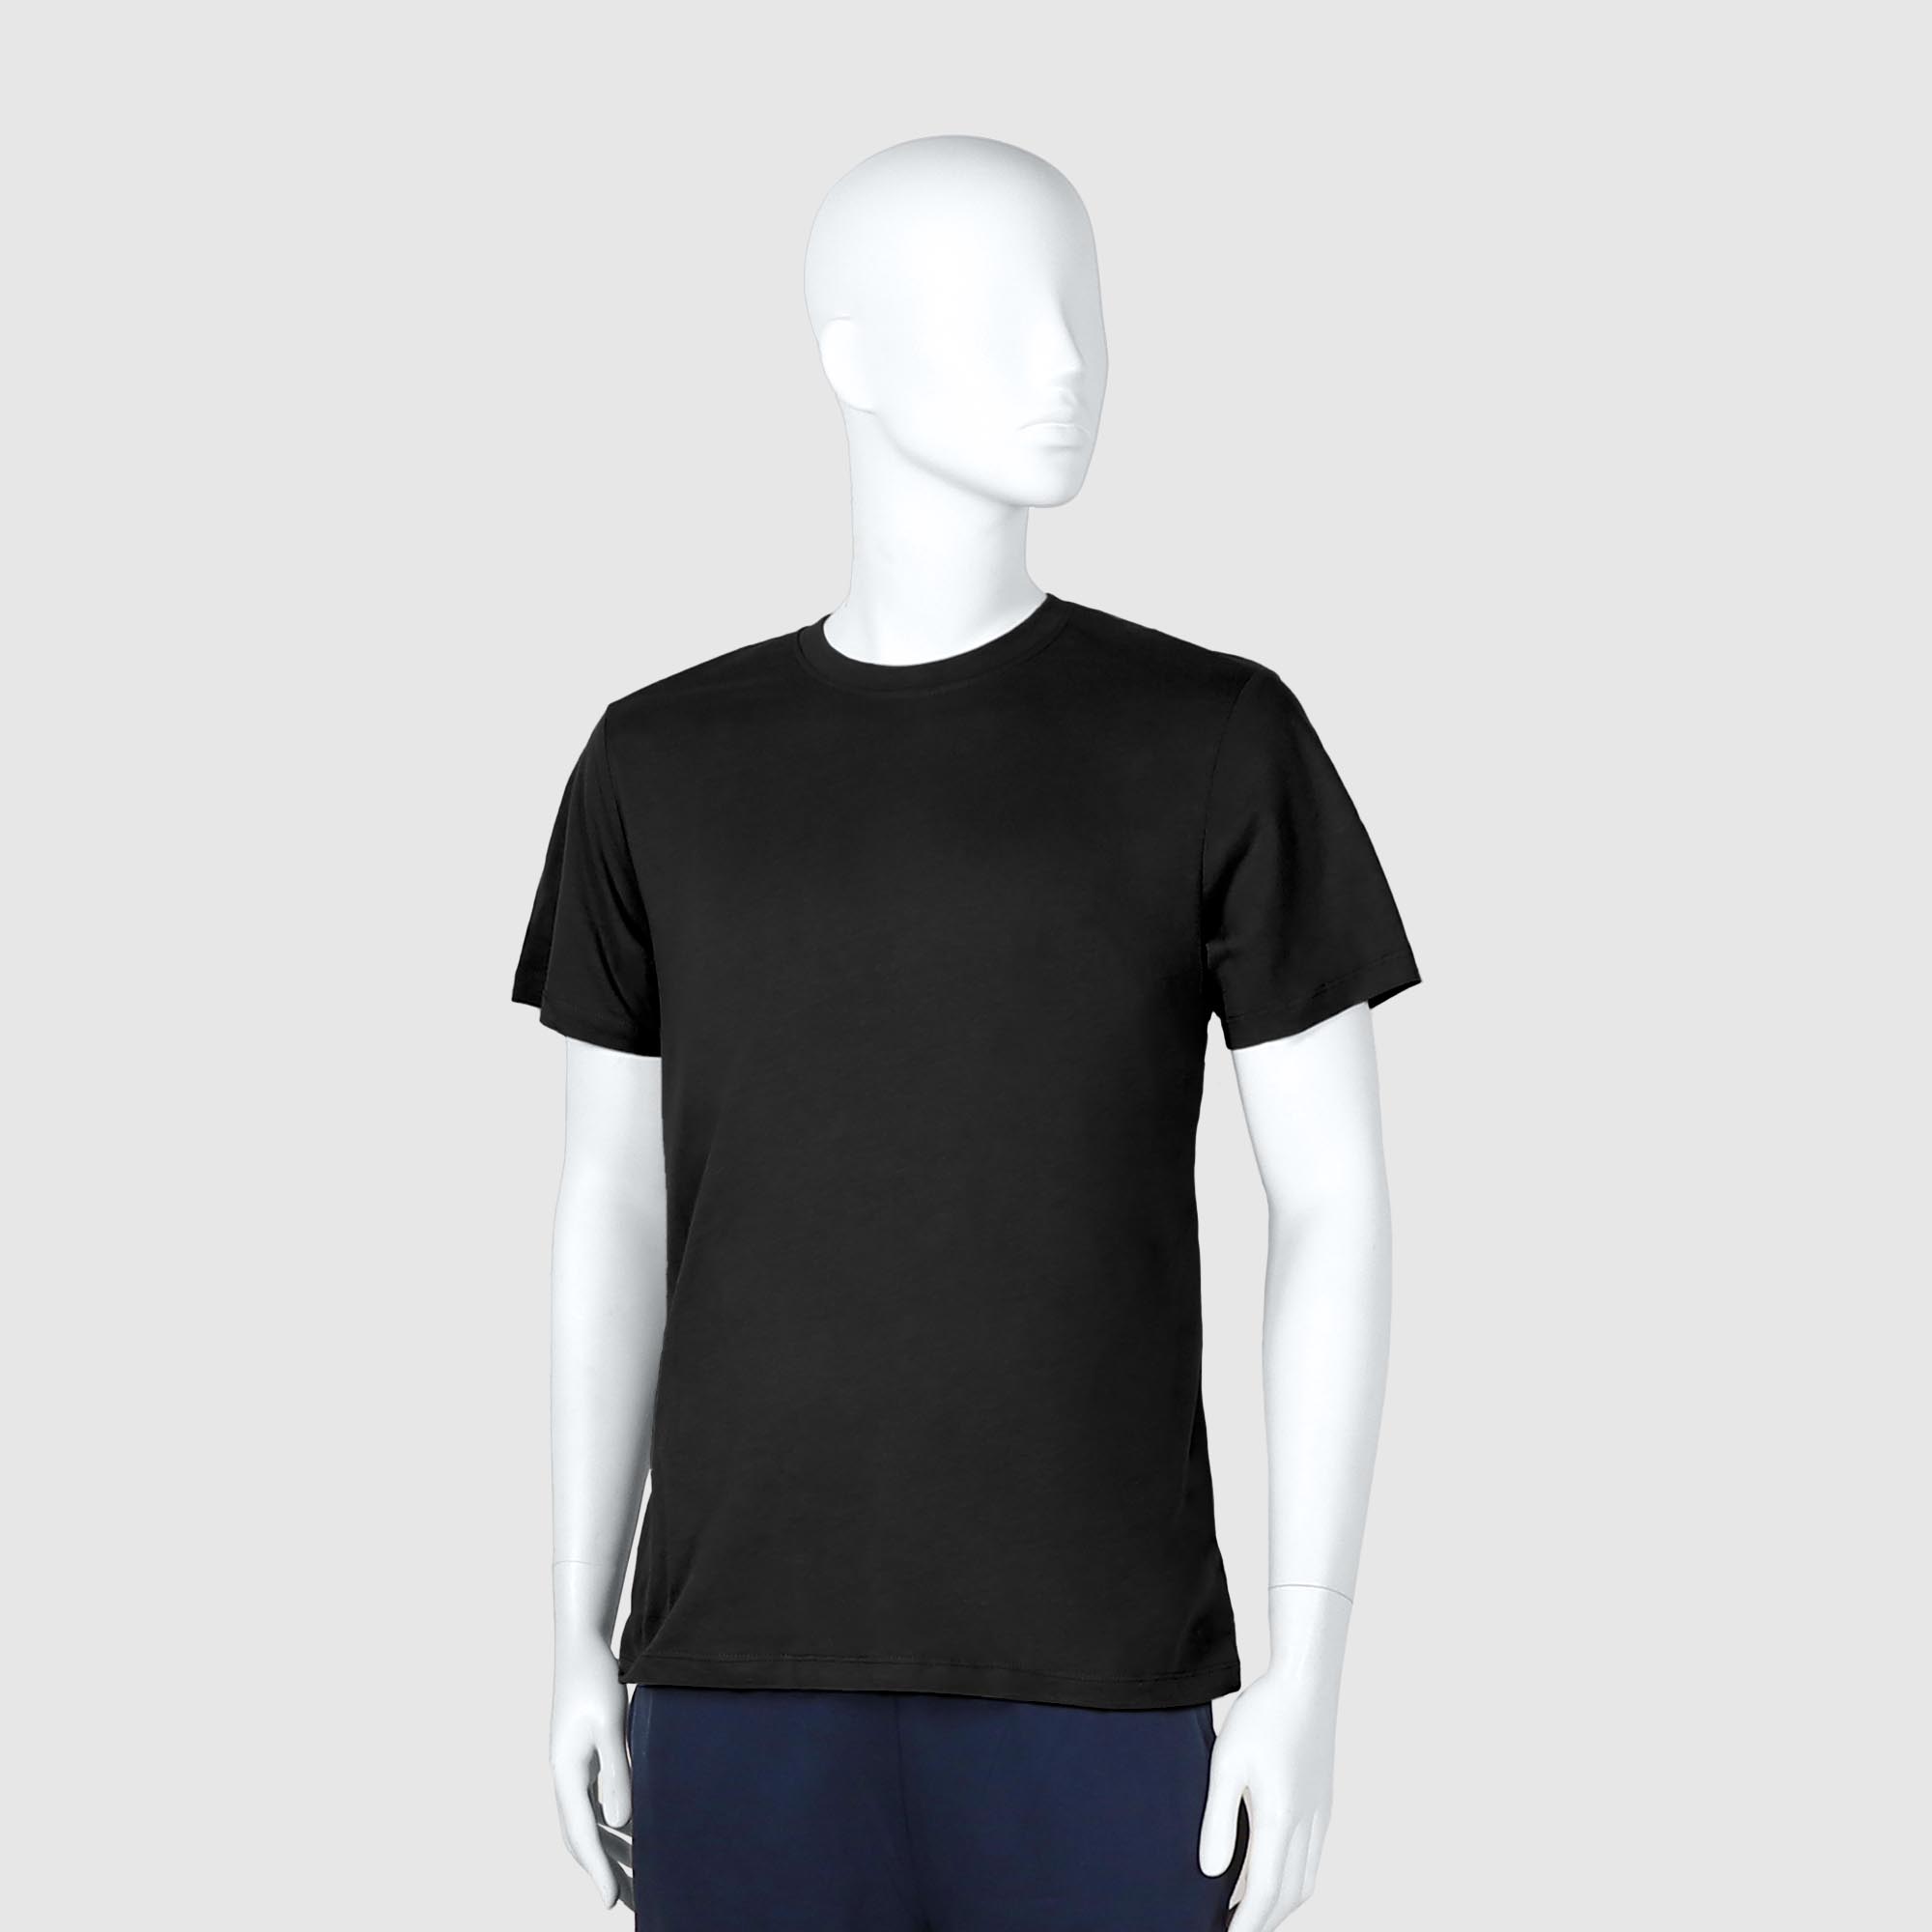 Мужская футболка Diva Teks чёрная (DTD-01), цвет чёрный, размер 40-52